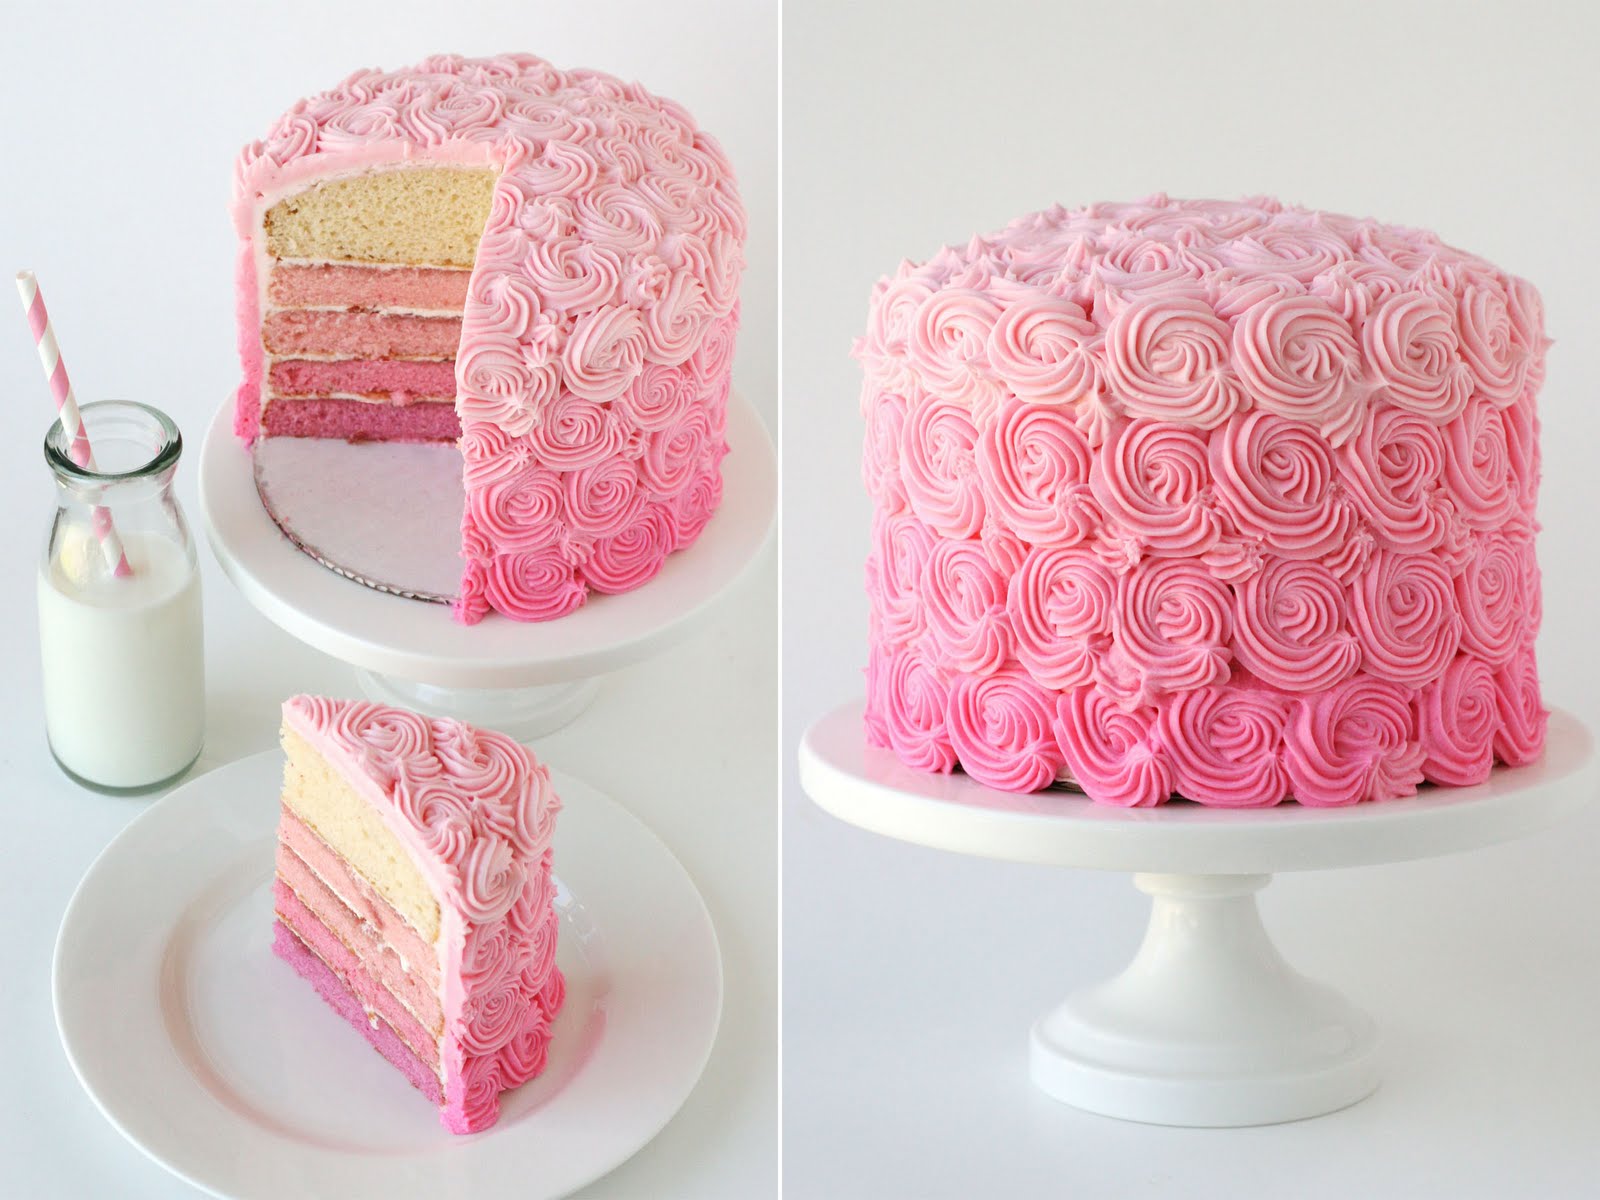 http://2.bp.blogspot.com/-OokU_qgtwmM/TliSkKO-71I/AAAAAAAACL4/vUoaPbnAVoo/s1600/Pink+Ombre+cake.jpg